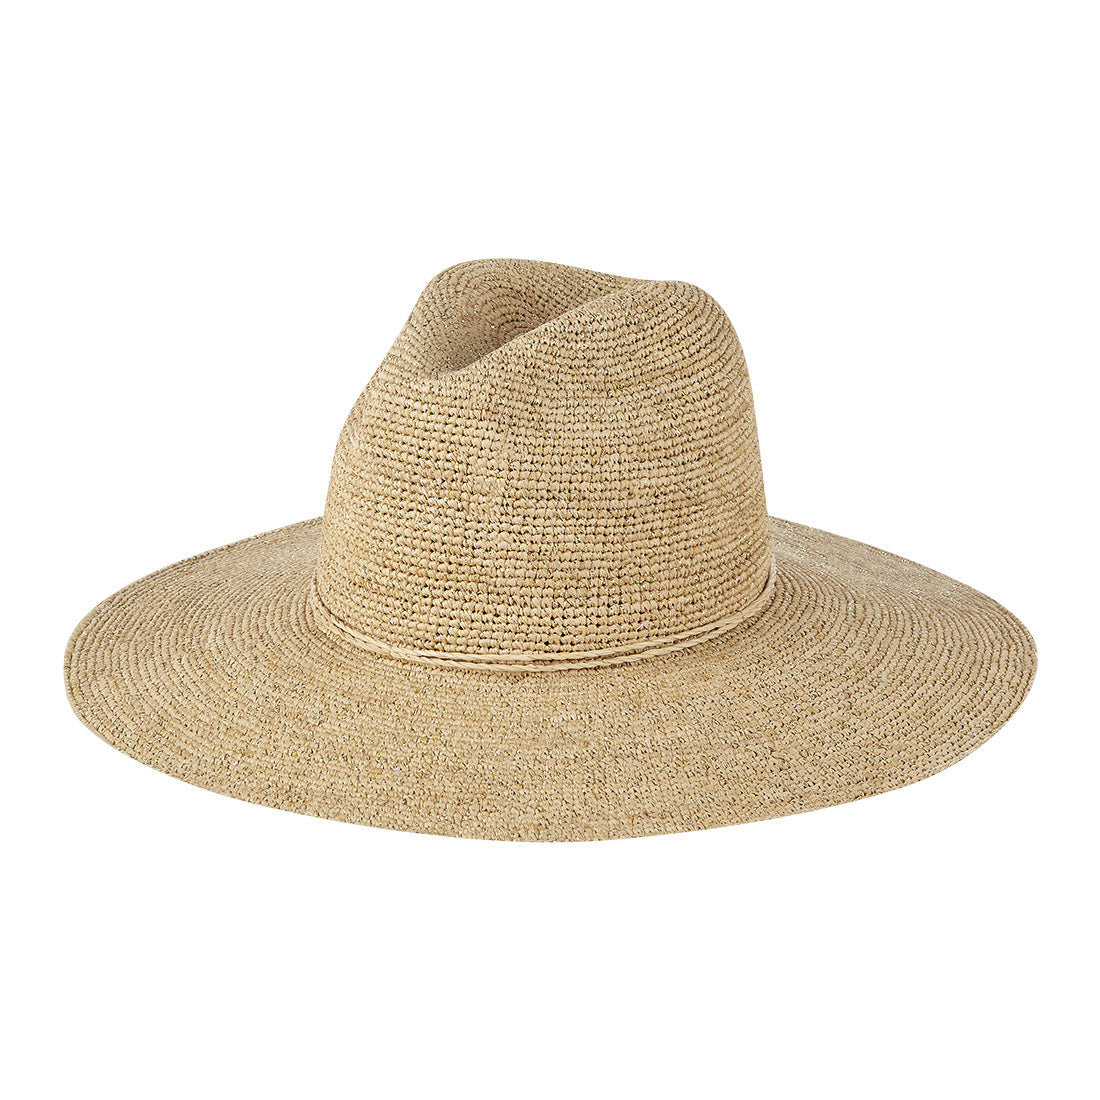 Stylish Summer Hat